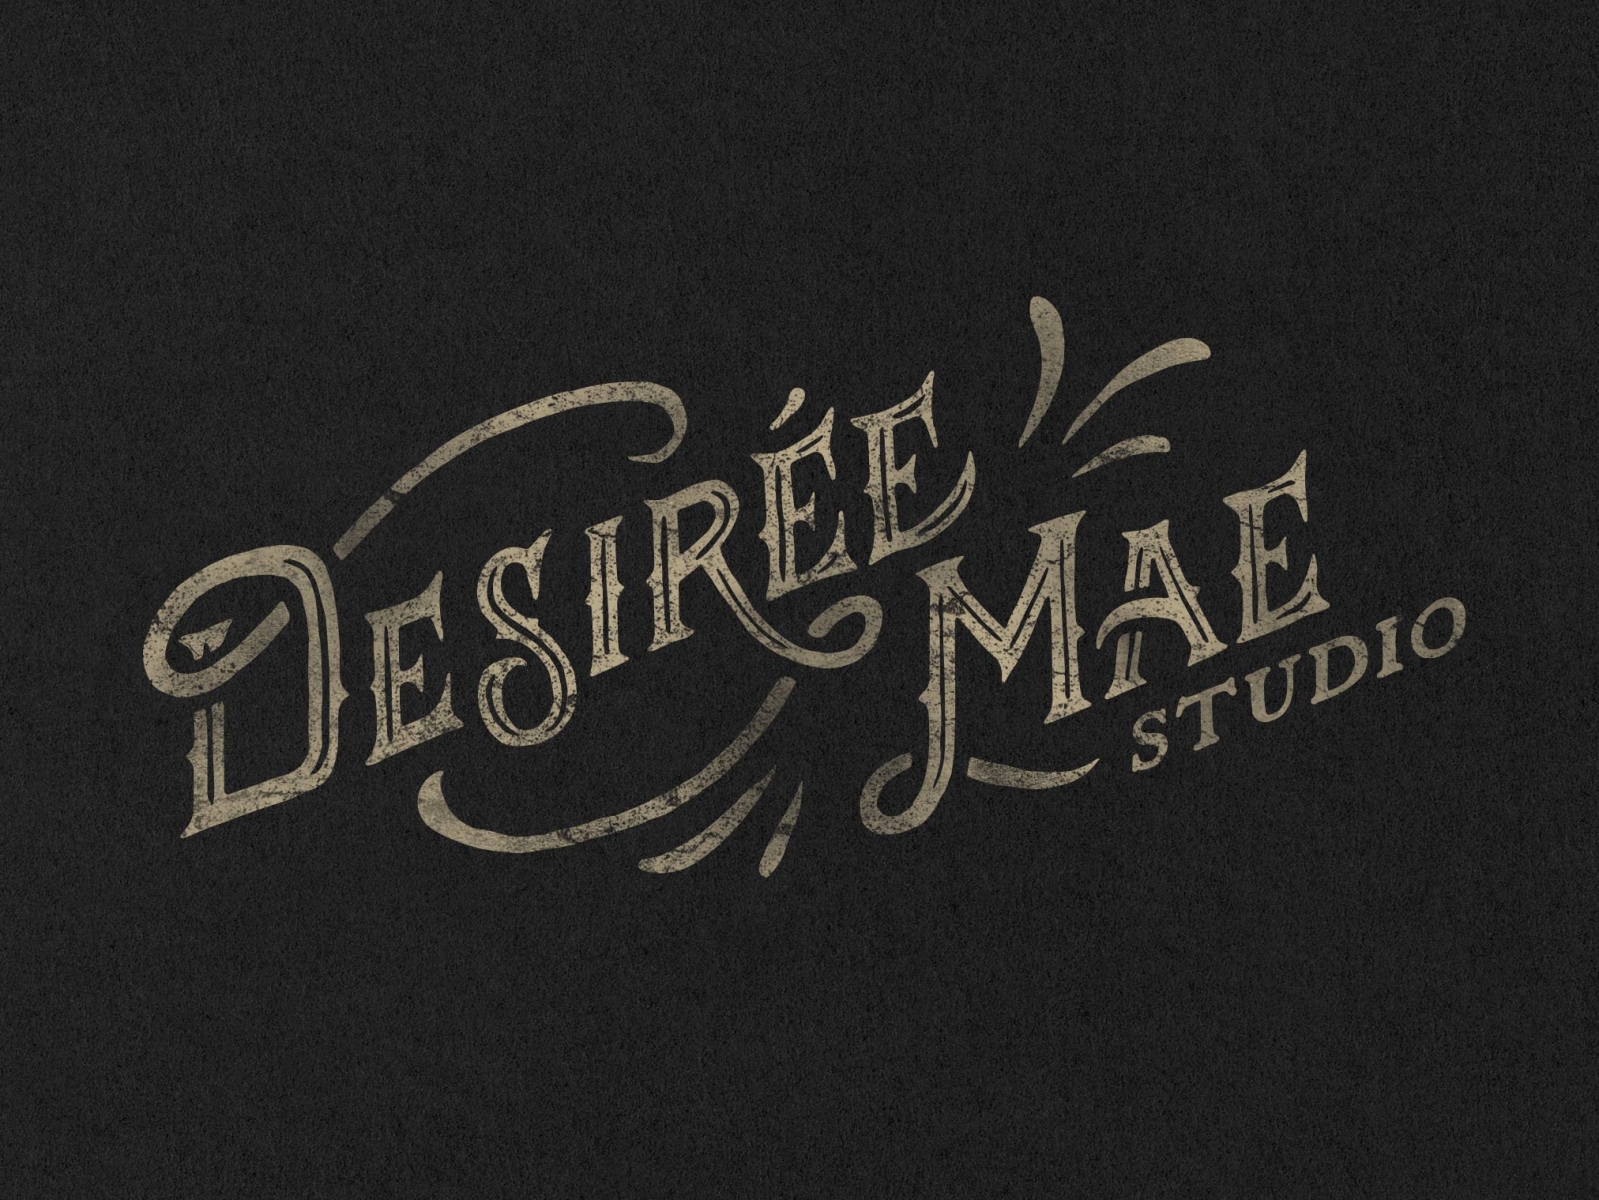 Desiree Mae Studio Logo by Desirée Mae Studio on Dribbble